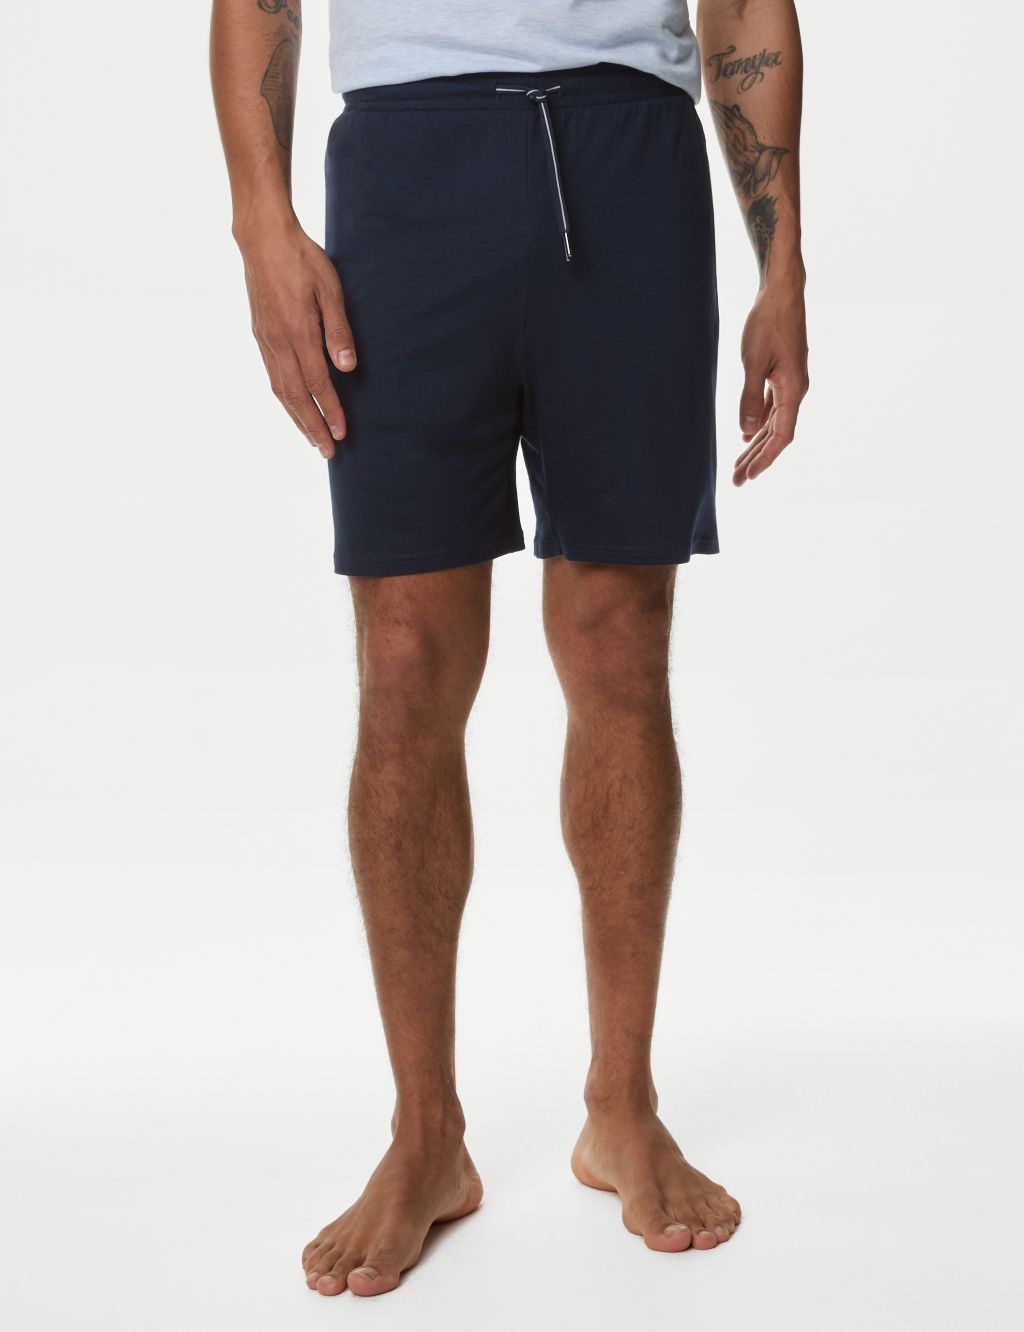 Men’s Pyjama Shorts